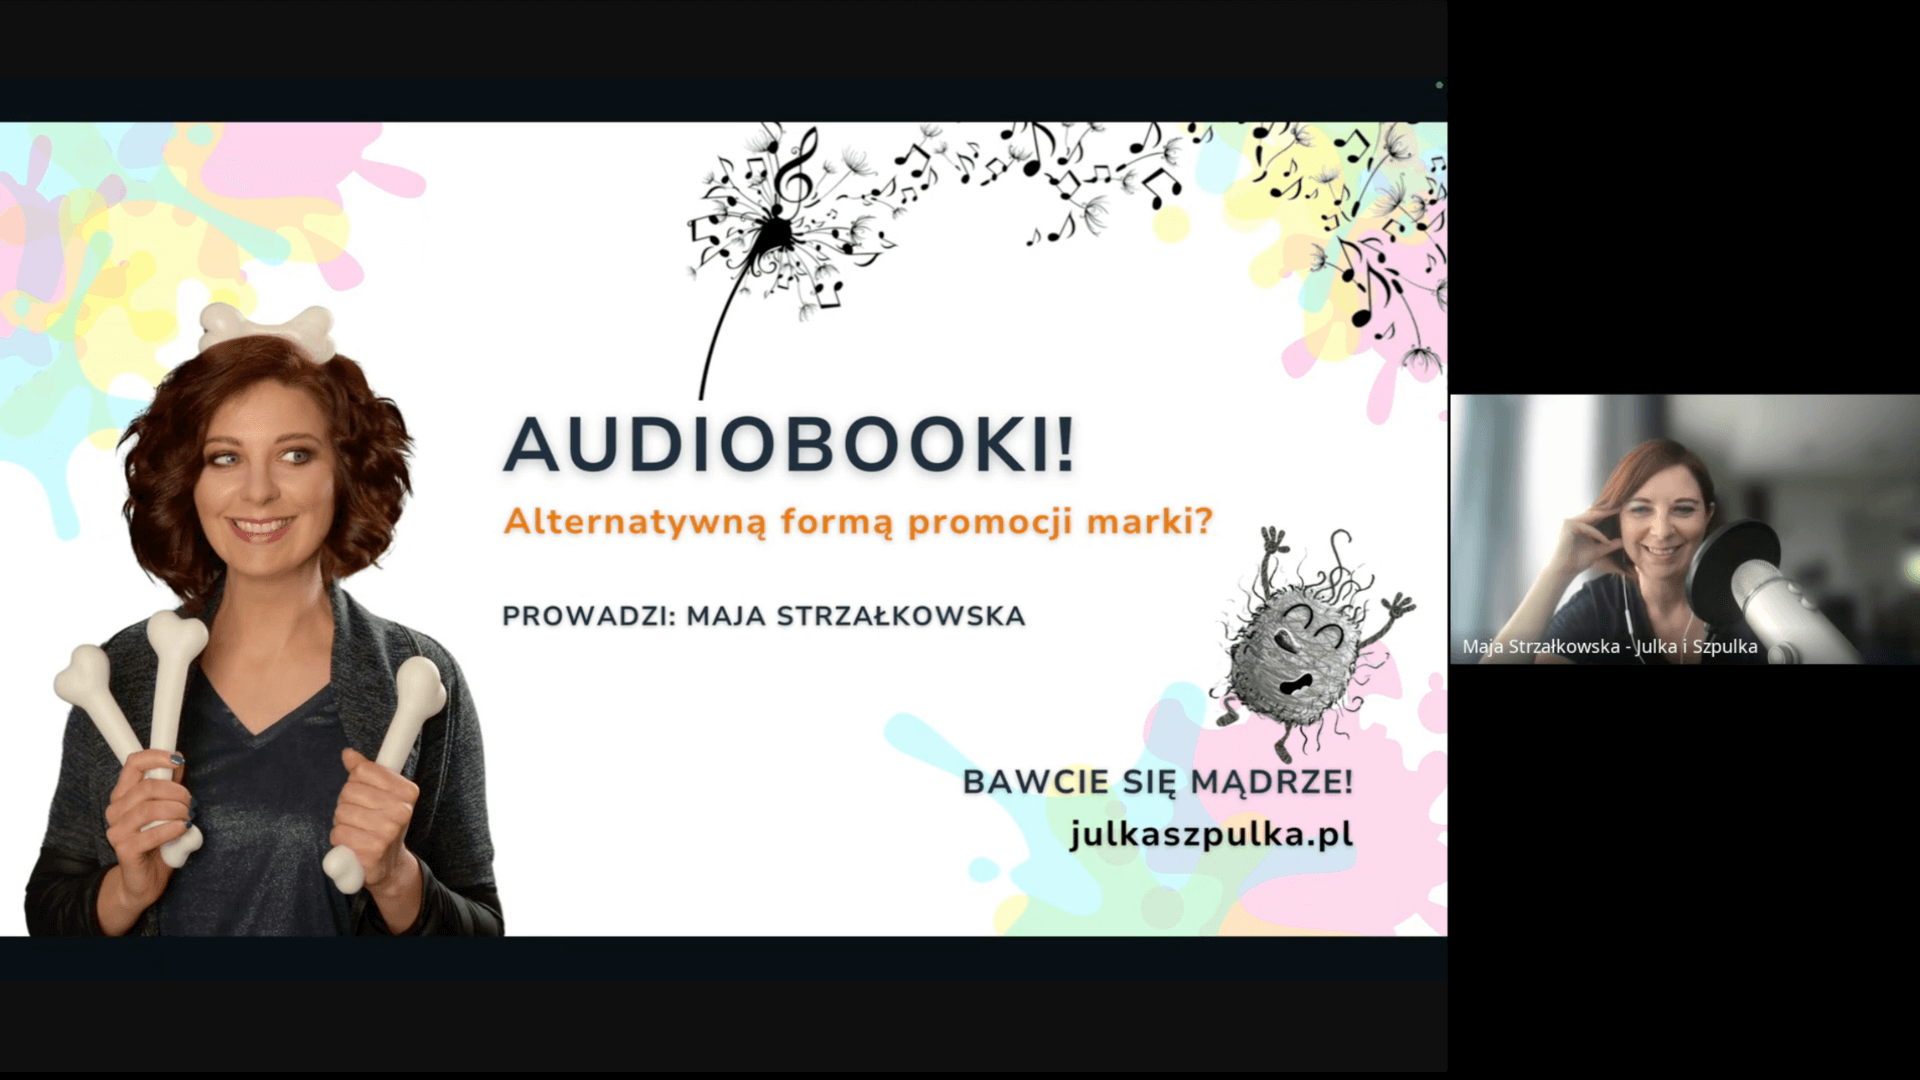 Audiobooki – alternatywna forma promocji marki